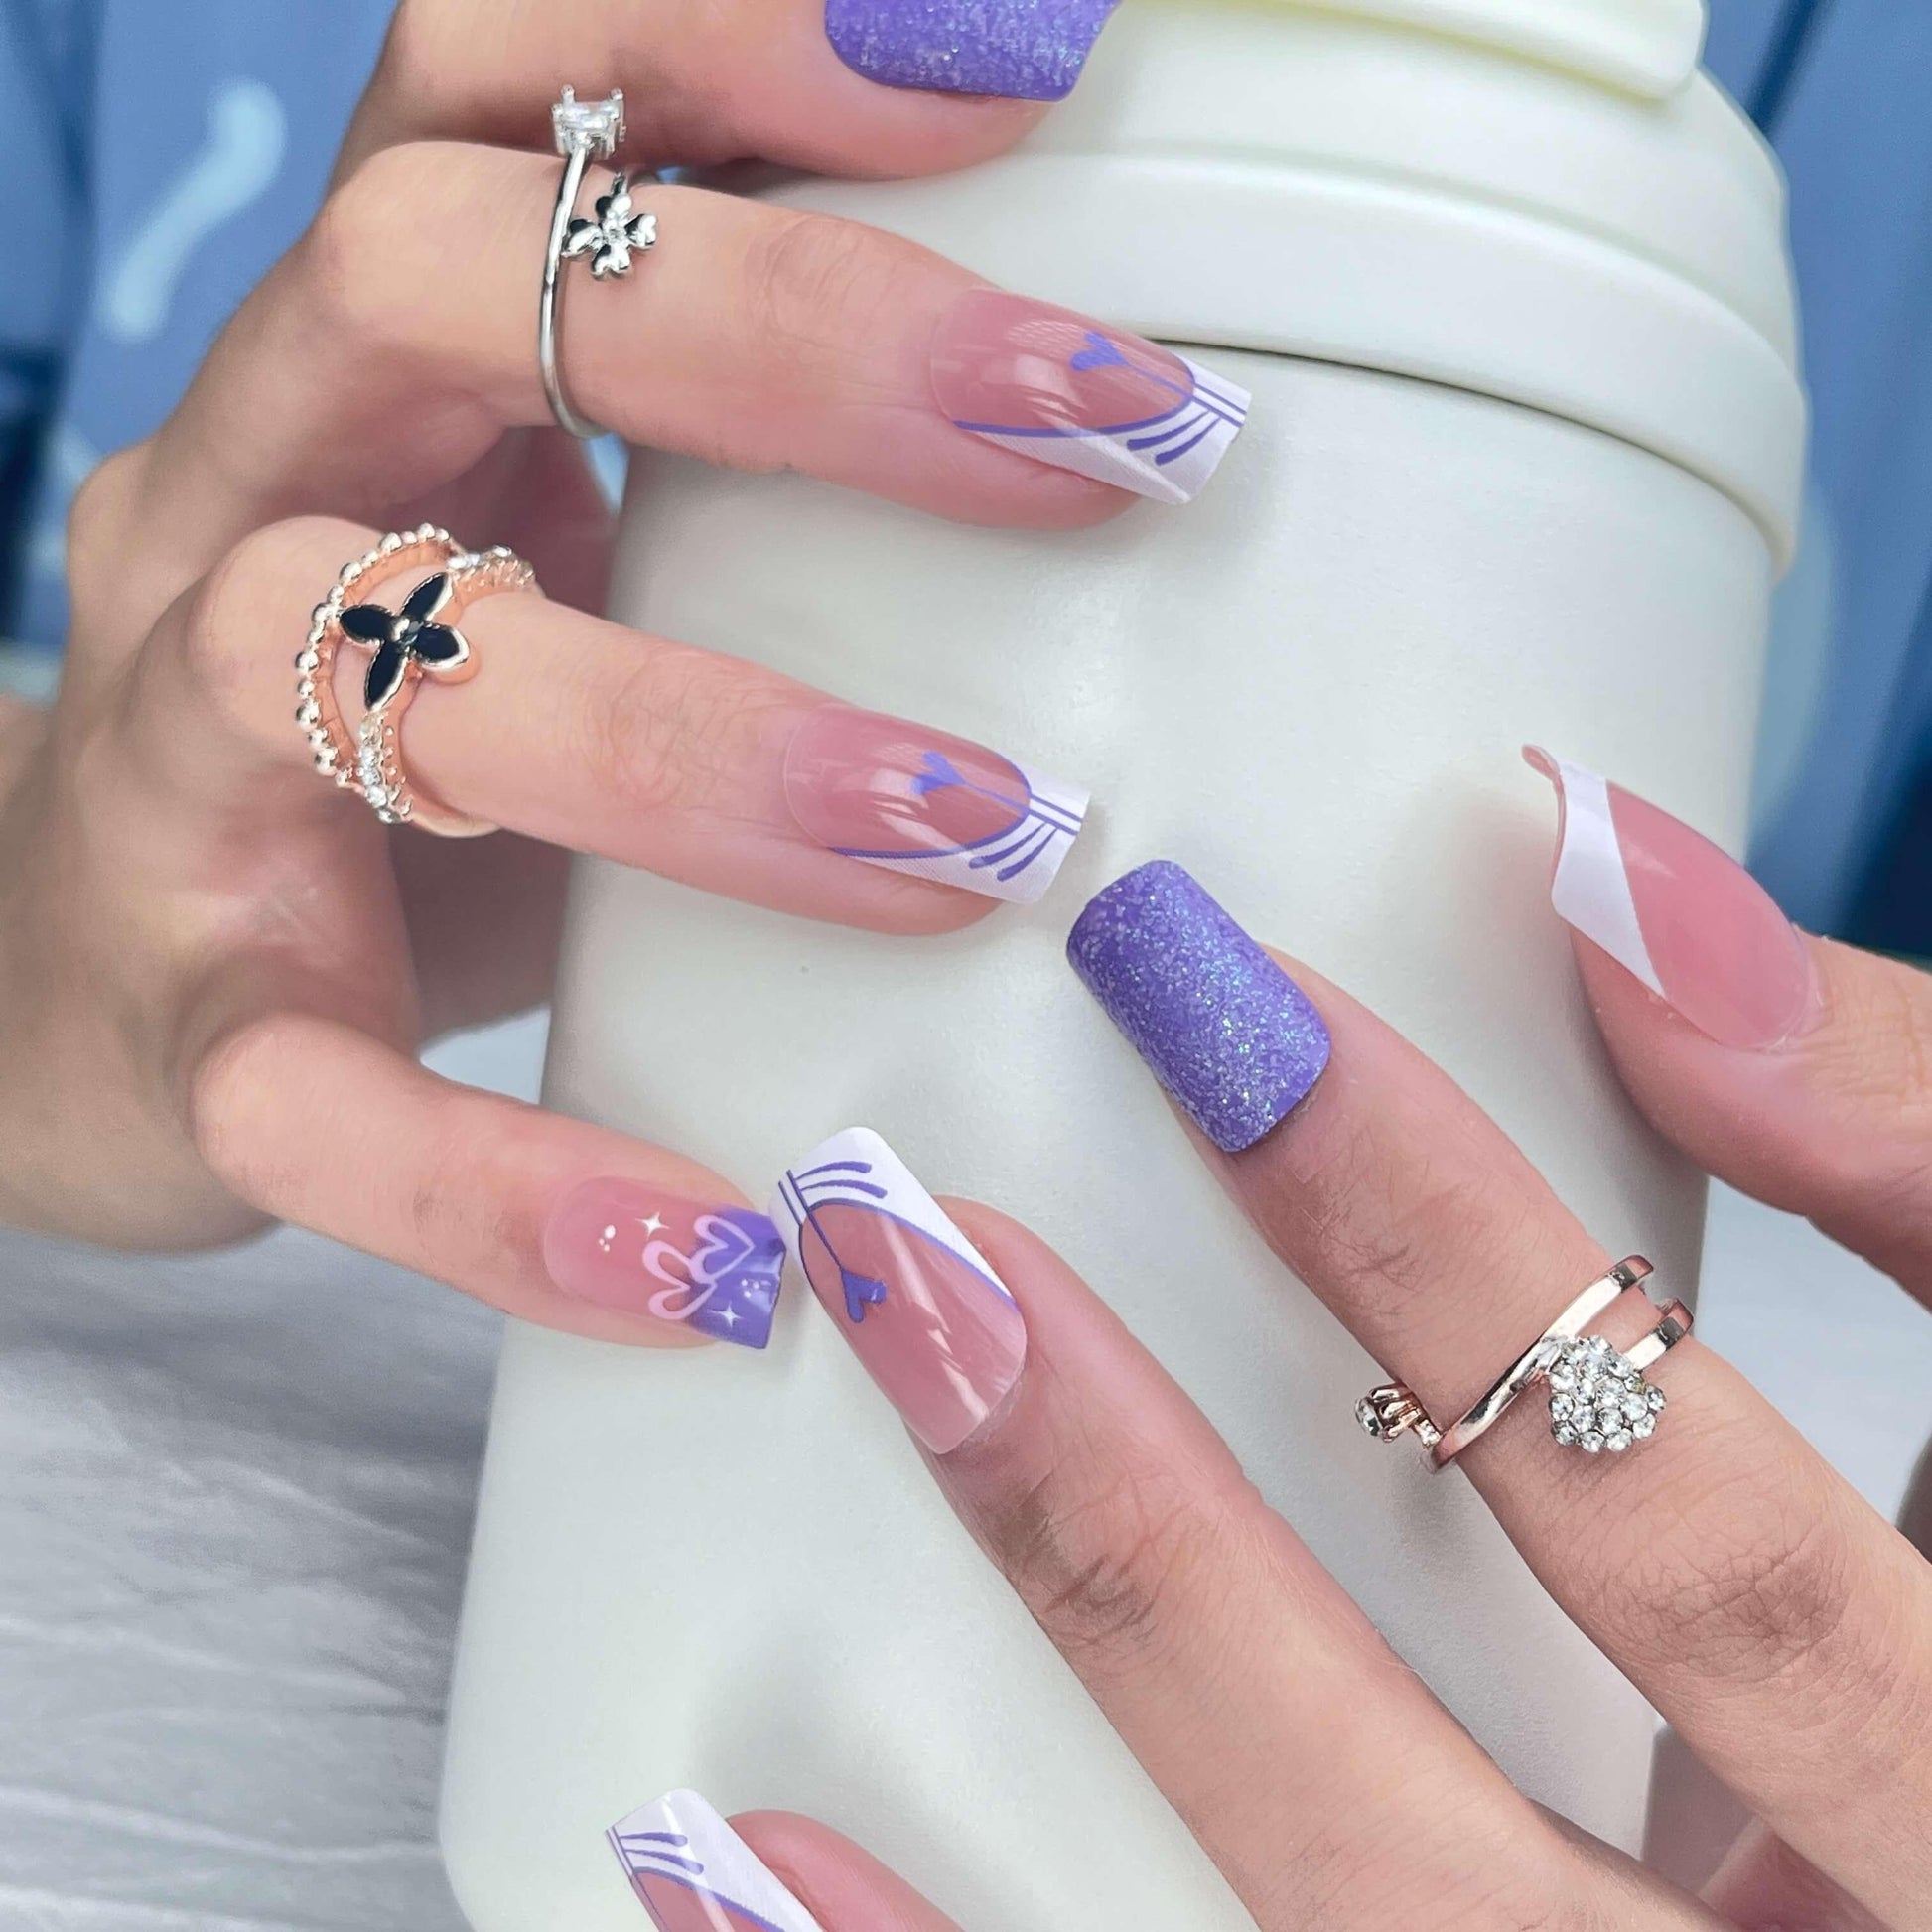 [AUTUMN SALE] Glittering Purple Wonderland Medium Square Press On Nails - Belle Rose Nails